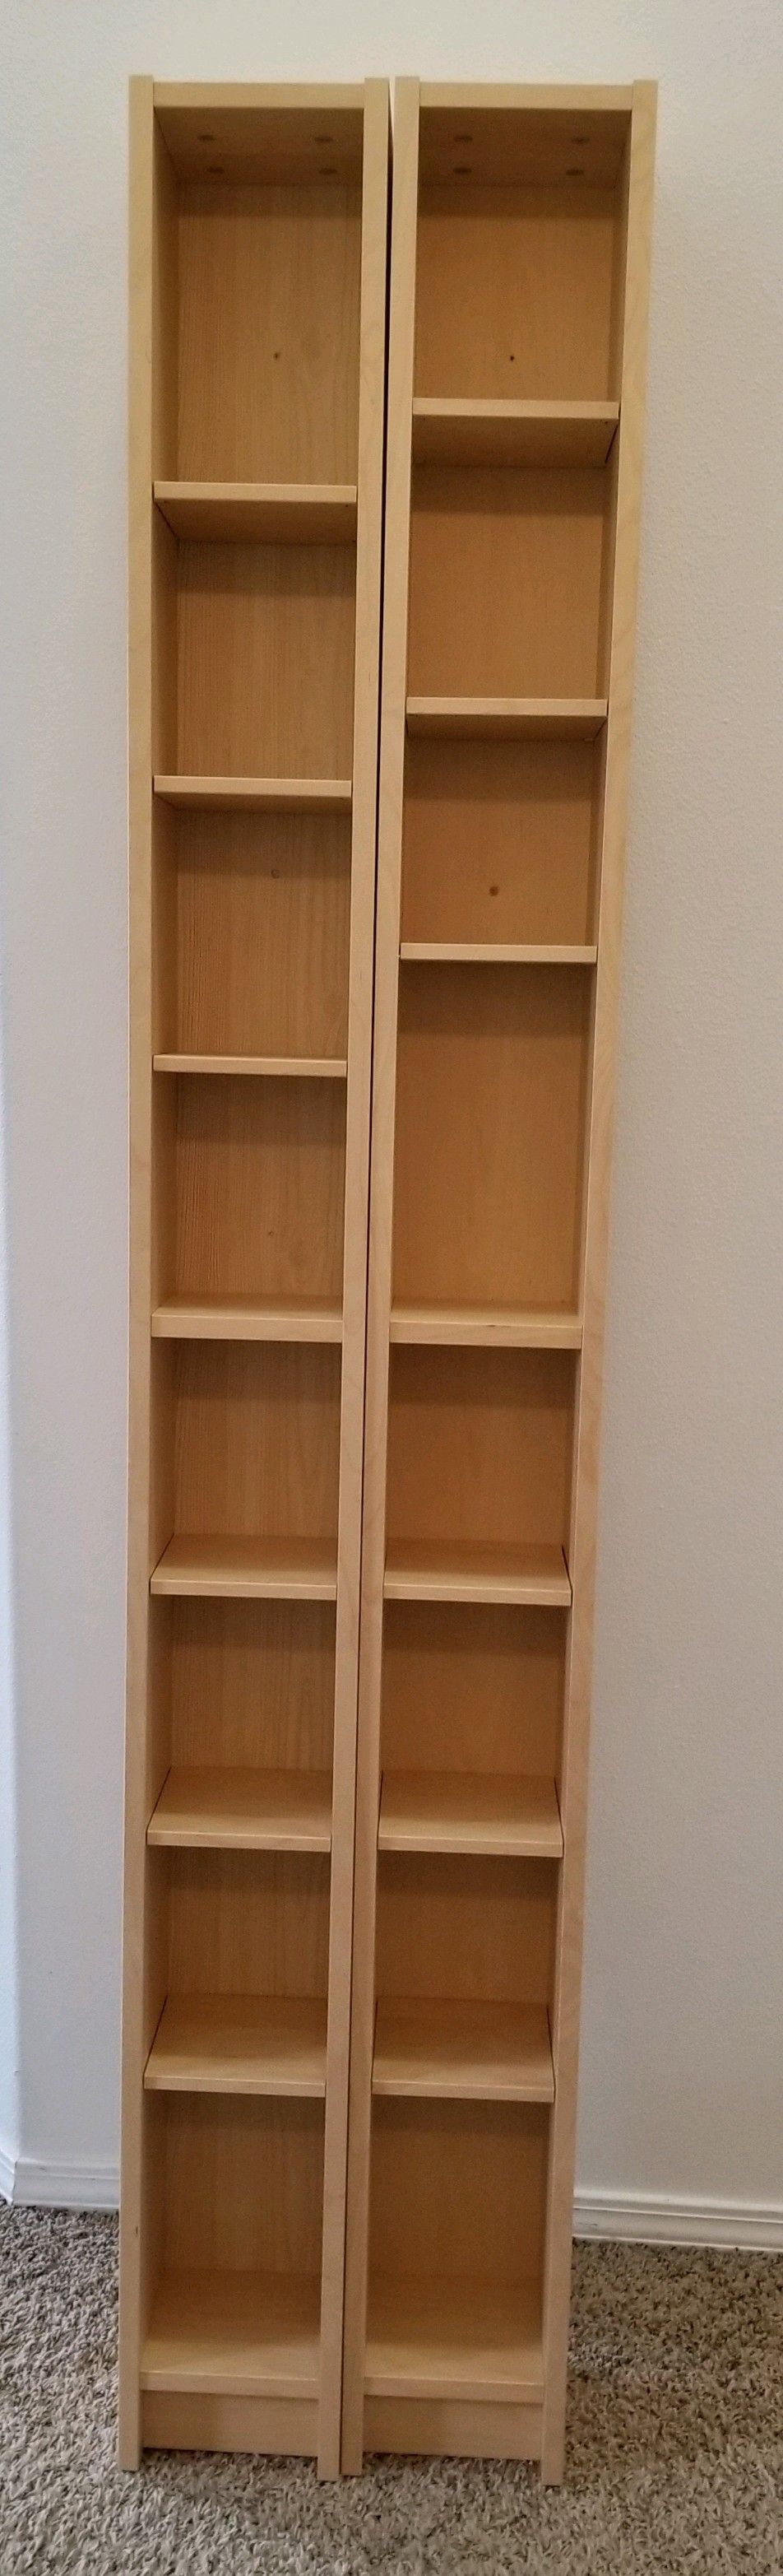 Two IKEA CD/MOVIE storage shelves